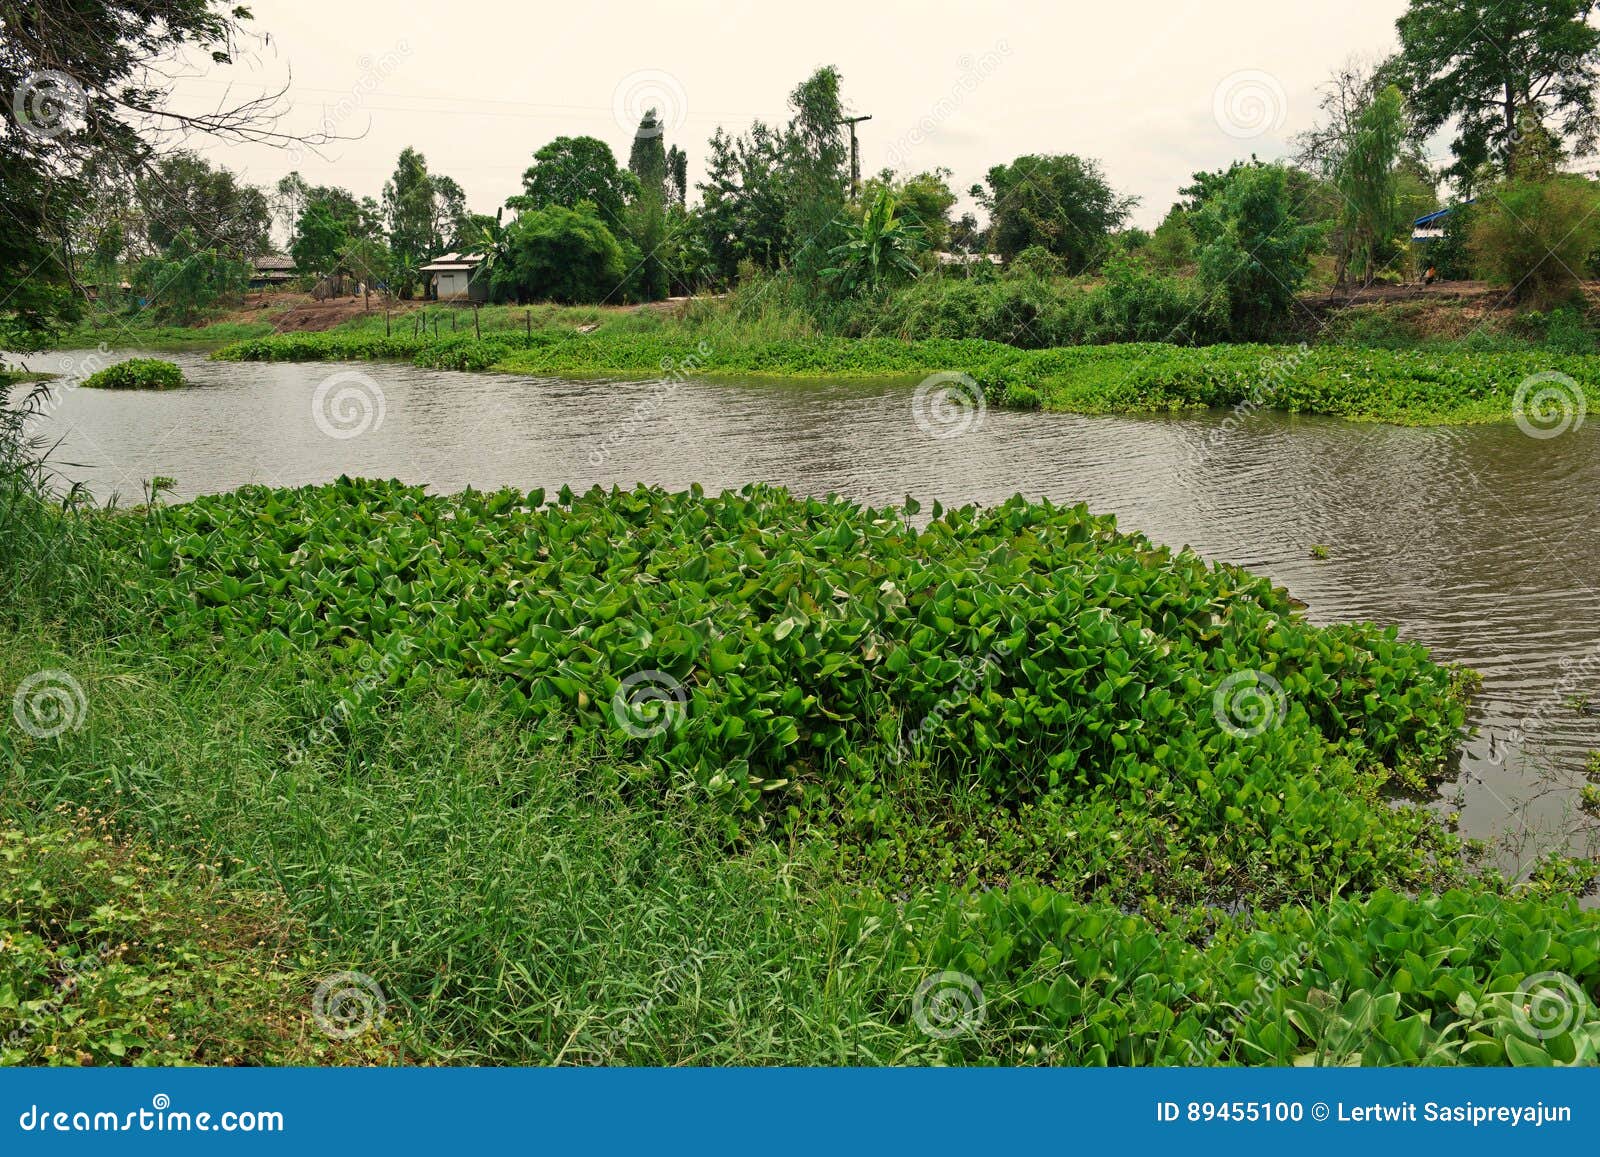 Common Water Hyacinth,the Invasive Weed Amazon Basin Stock Photo ...